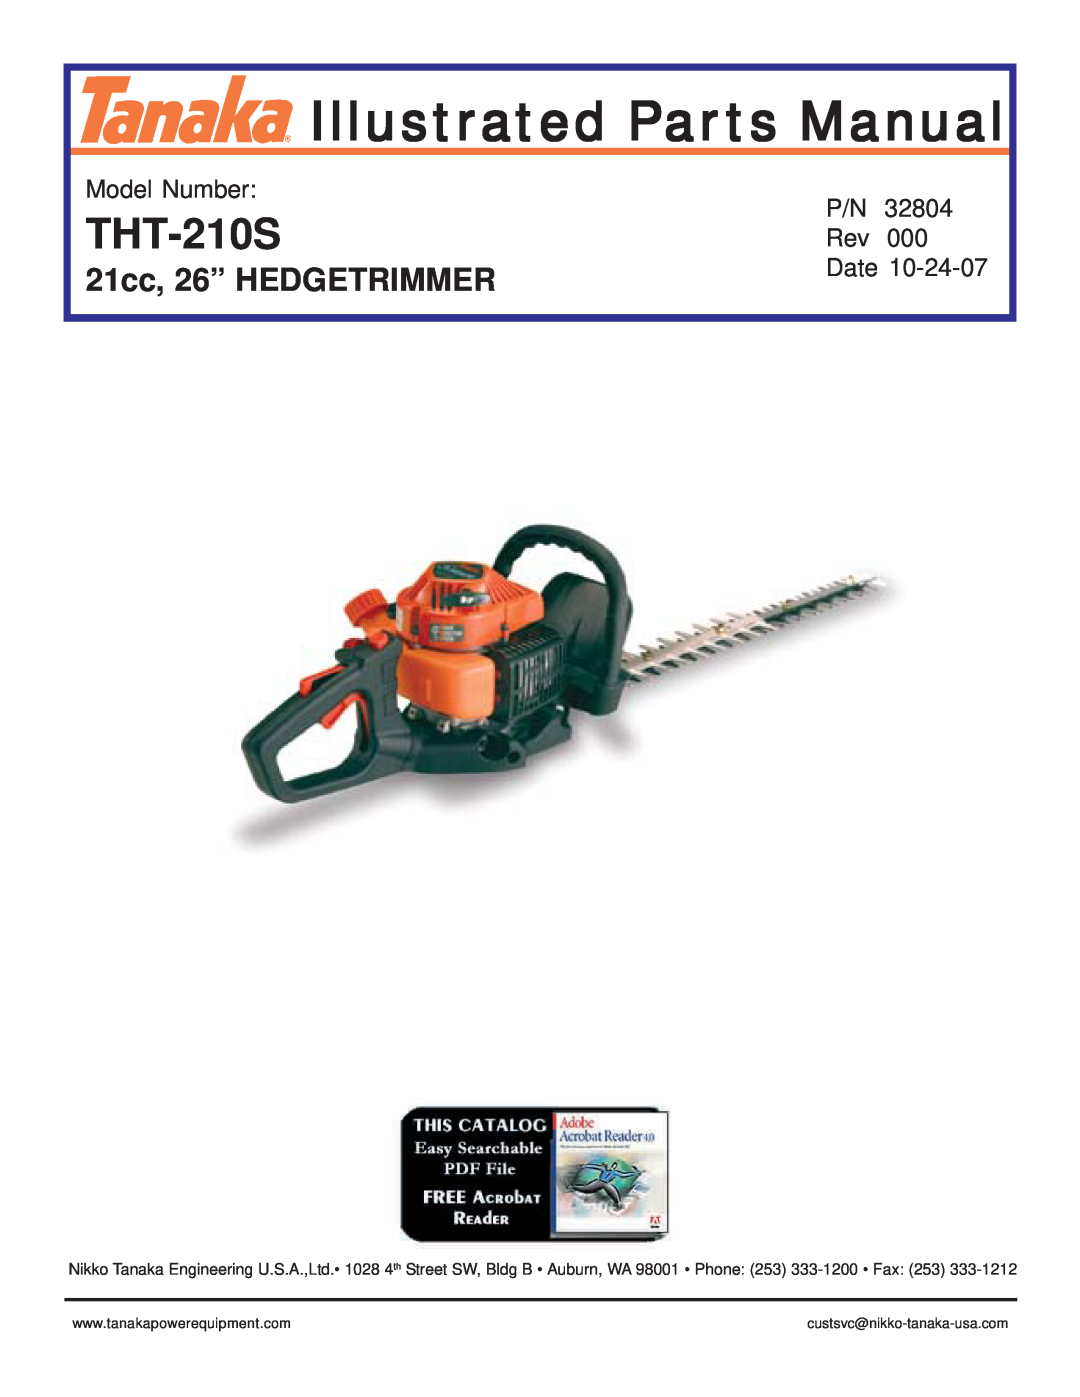 Tanaka THT-210S manual Model Number, Illustrated Parts Manual, 21cc, 26” HEDGETRIMMER, Date, custsvc@nikko-tanaka-usa.com 